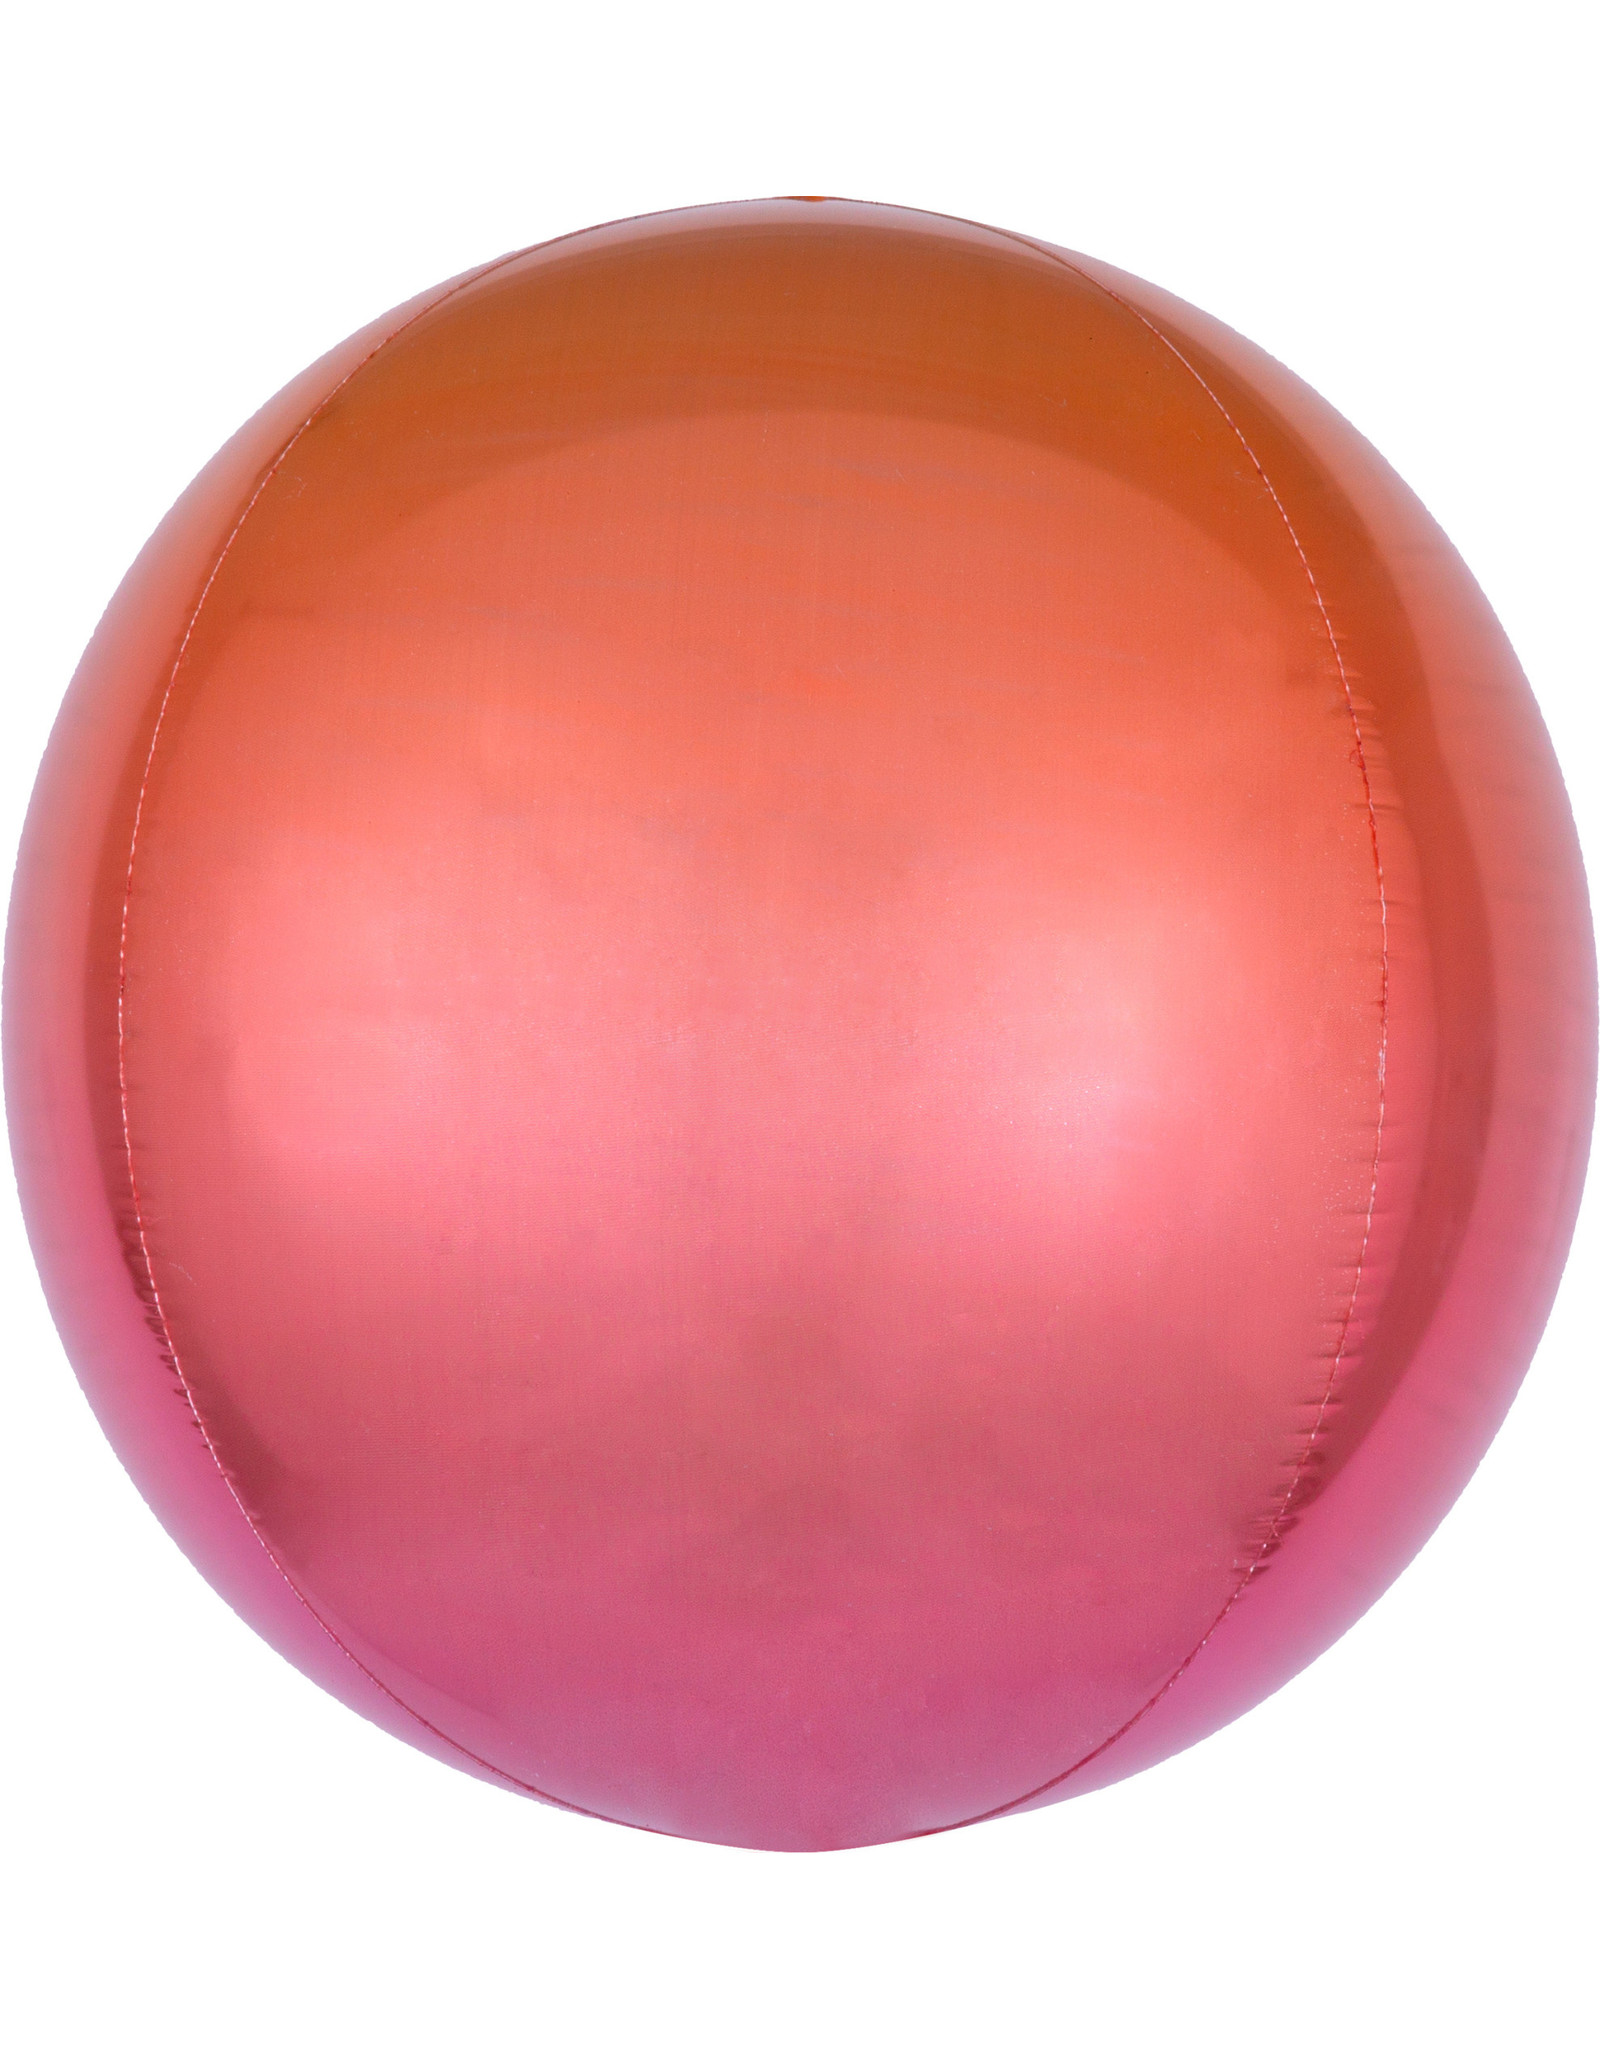 Amscan folieballon orbz oranje rood 38 x 38 cm